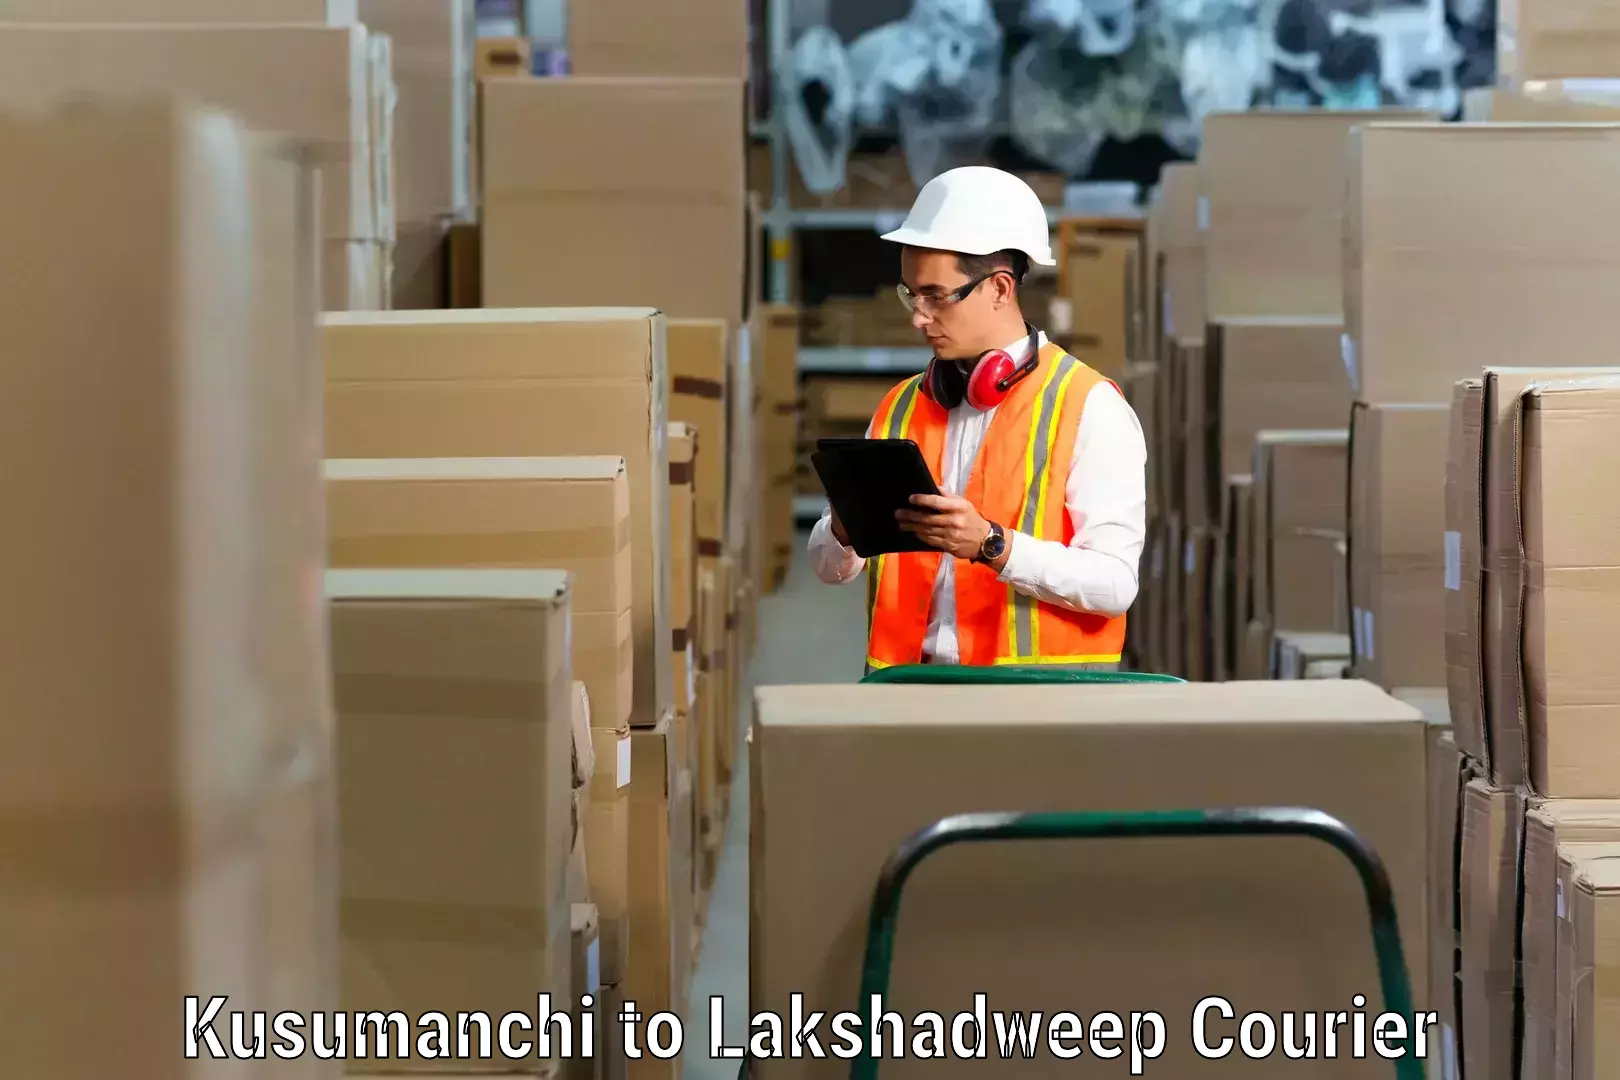 Professional packing services in Kusumanchi to Lakshadweep